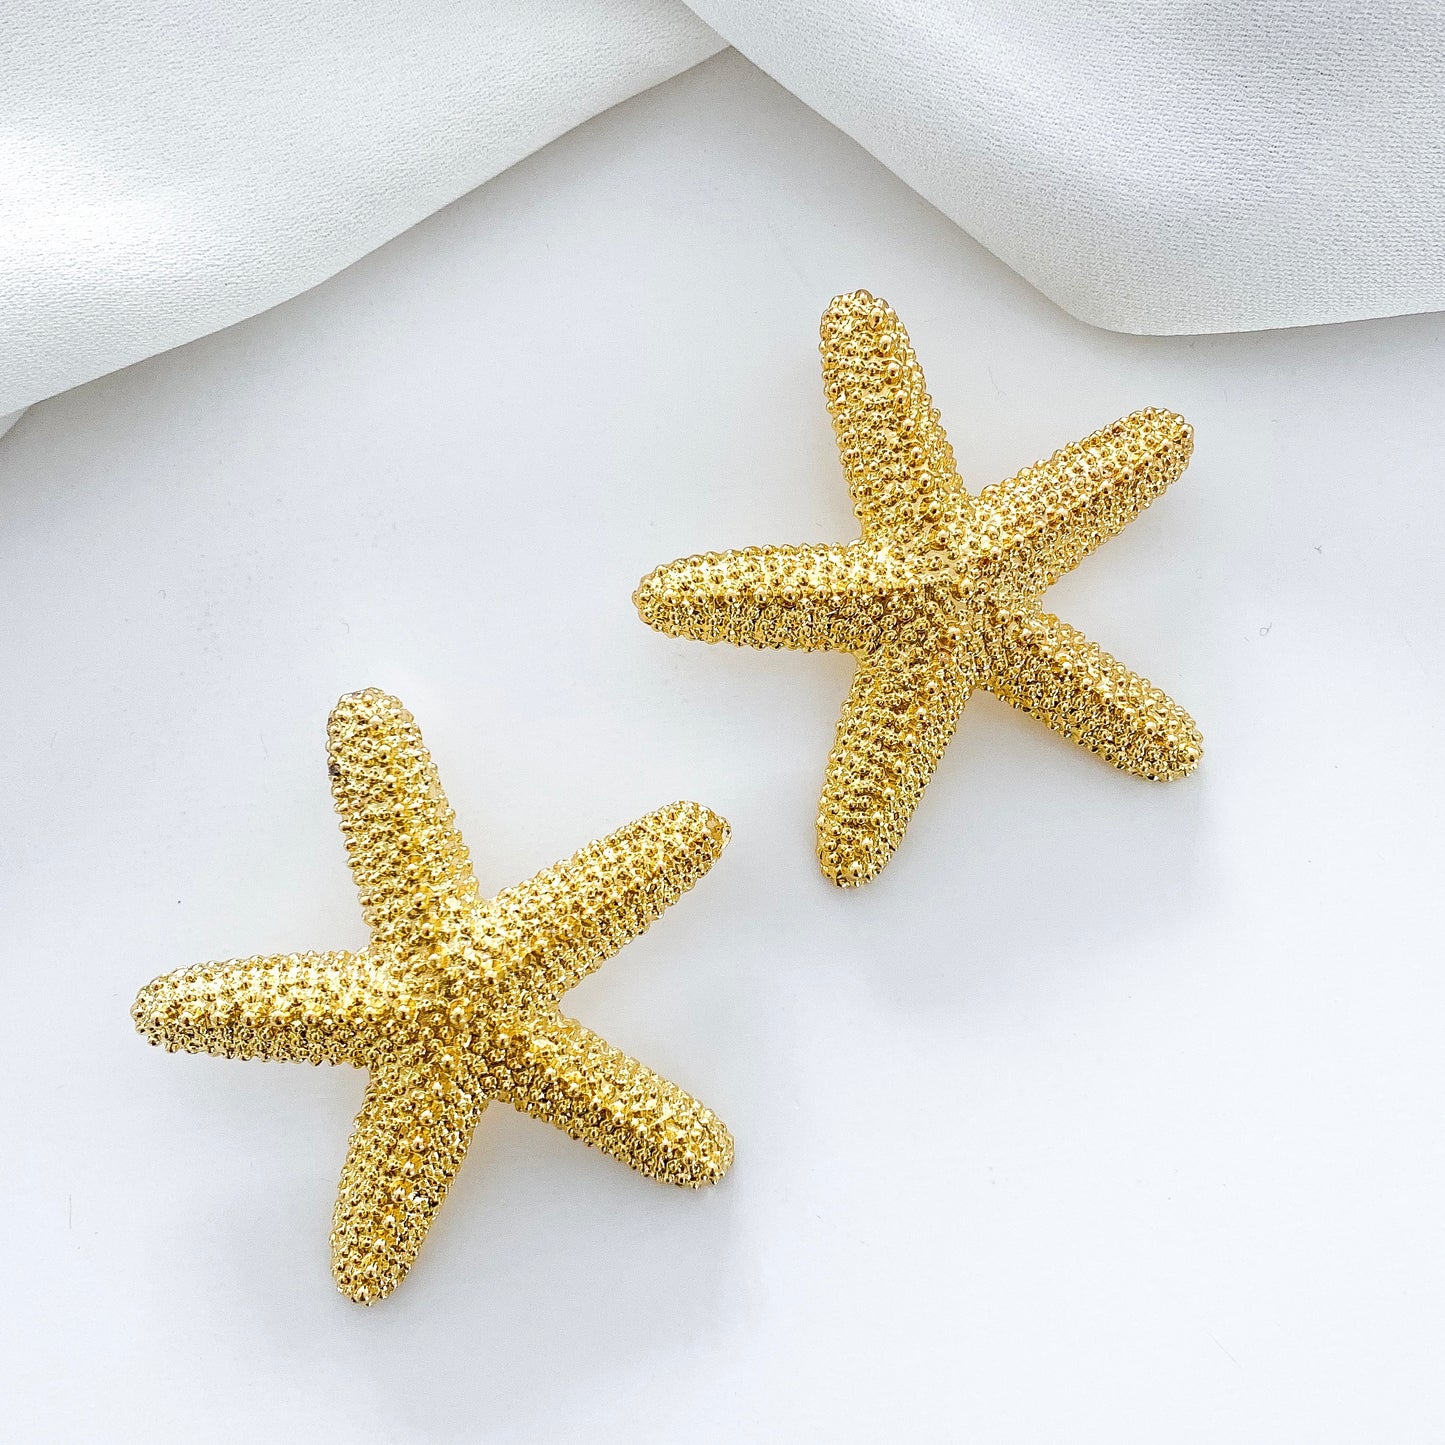 Statement Starfish Gold Earrings